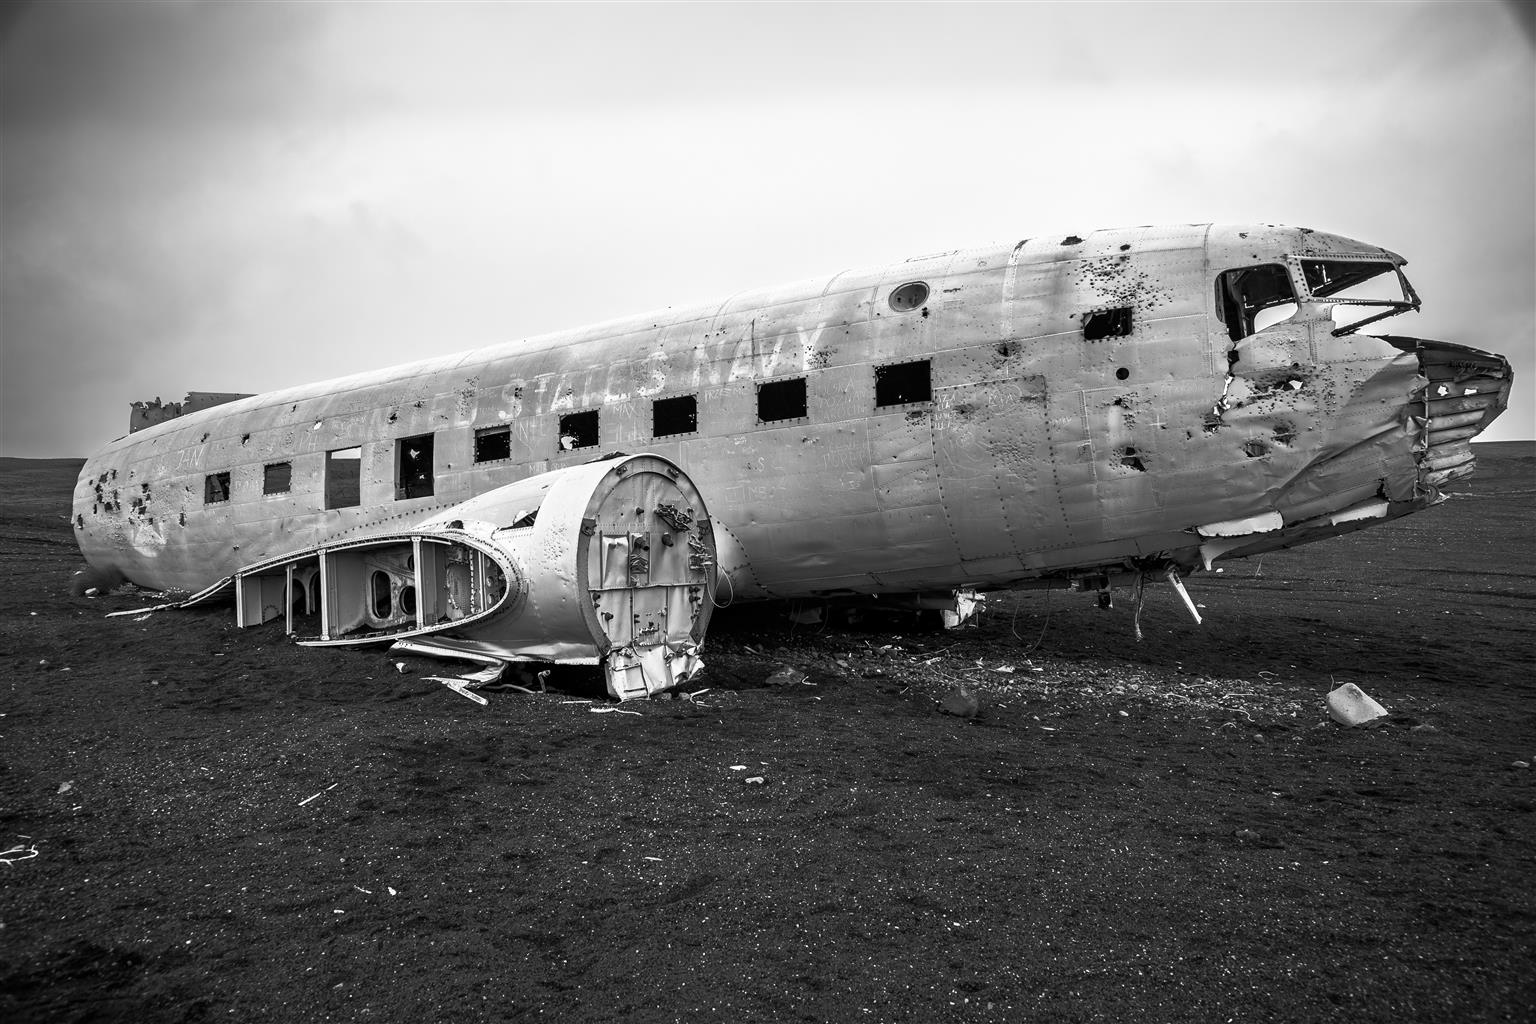 Crashed DC-3 Plane near Black Sand Beach in Vik, Iceland